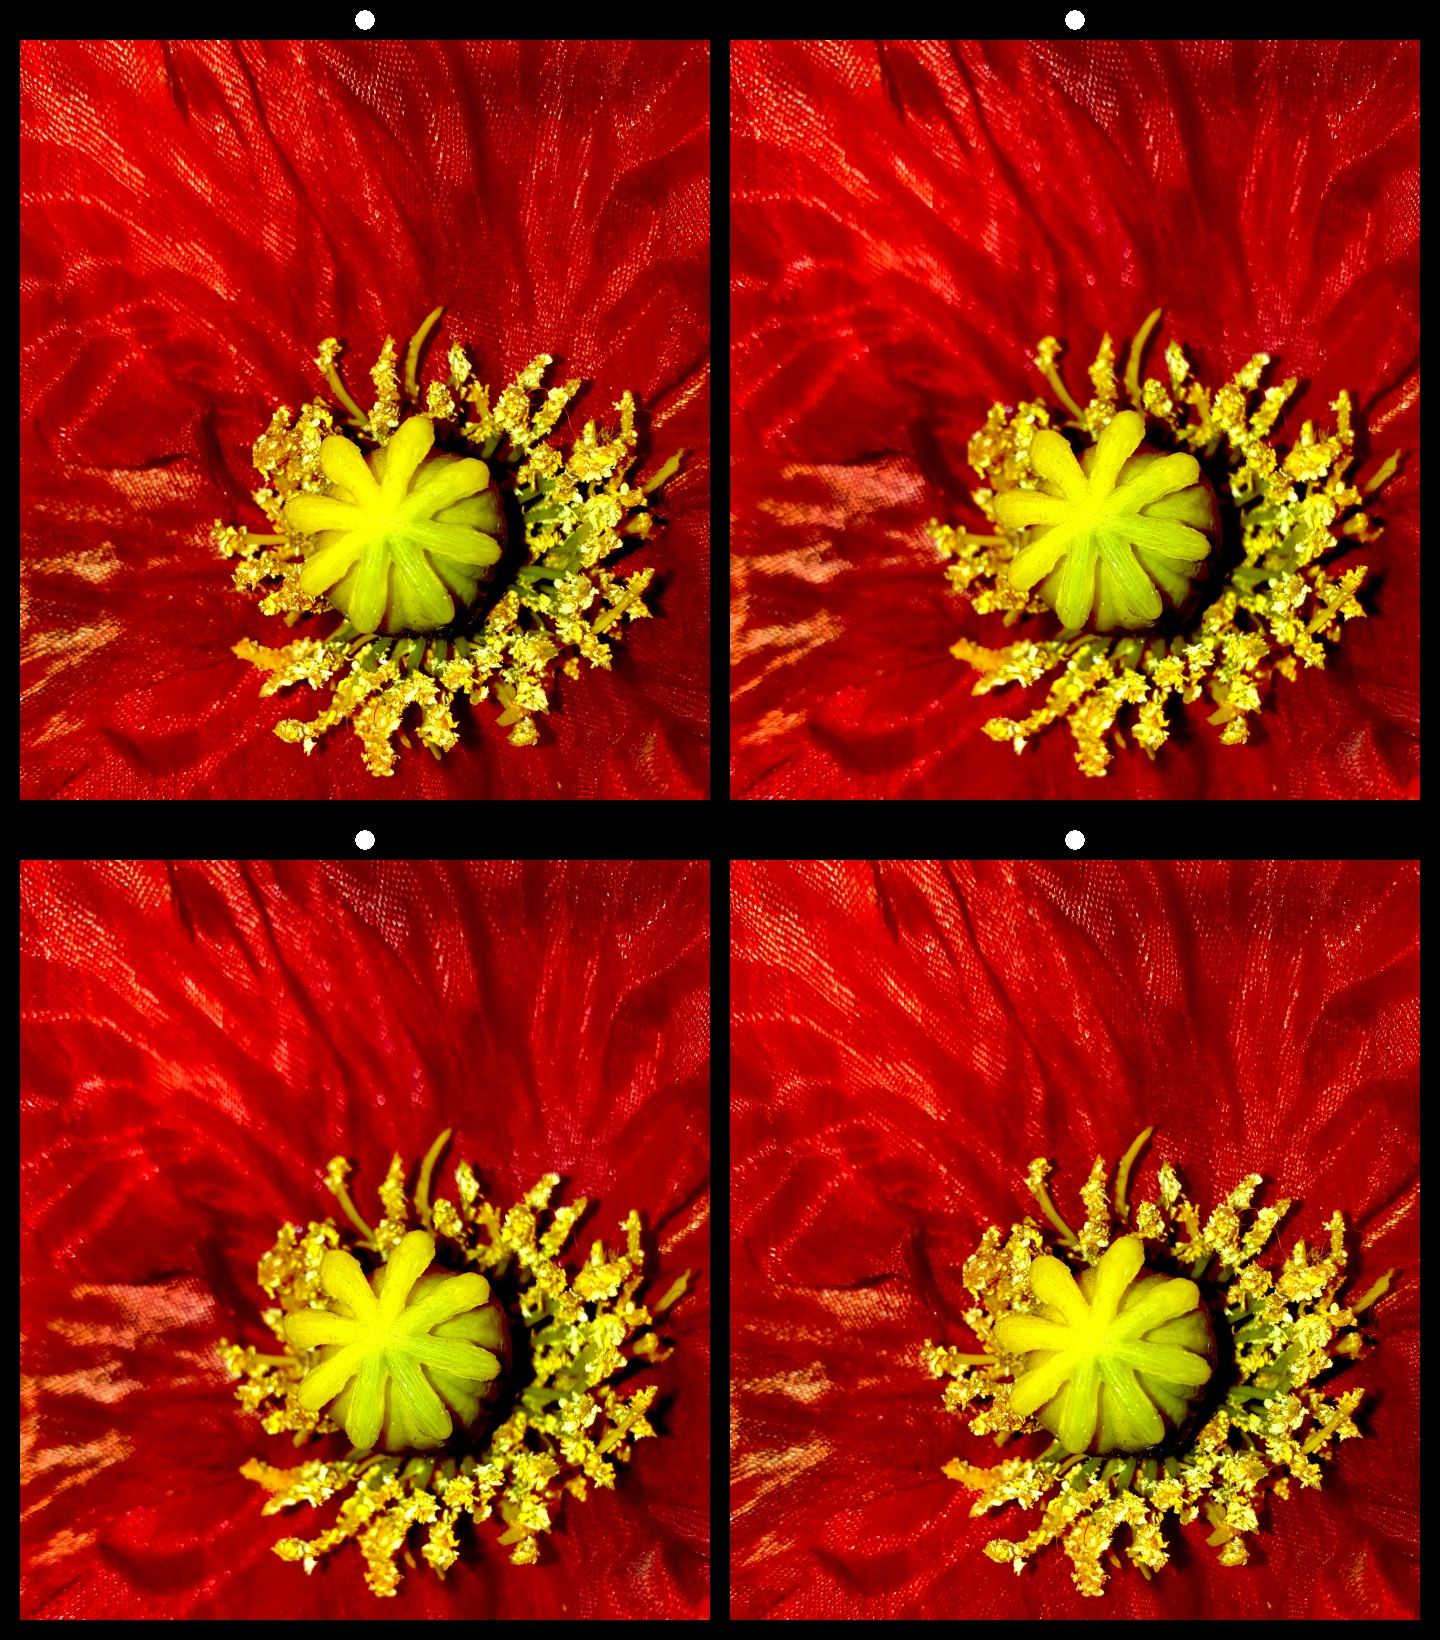 Artificial Poppy Flower by Dr V G Mohanan Nair, APSA, QPSA